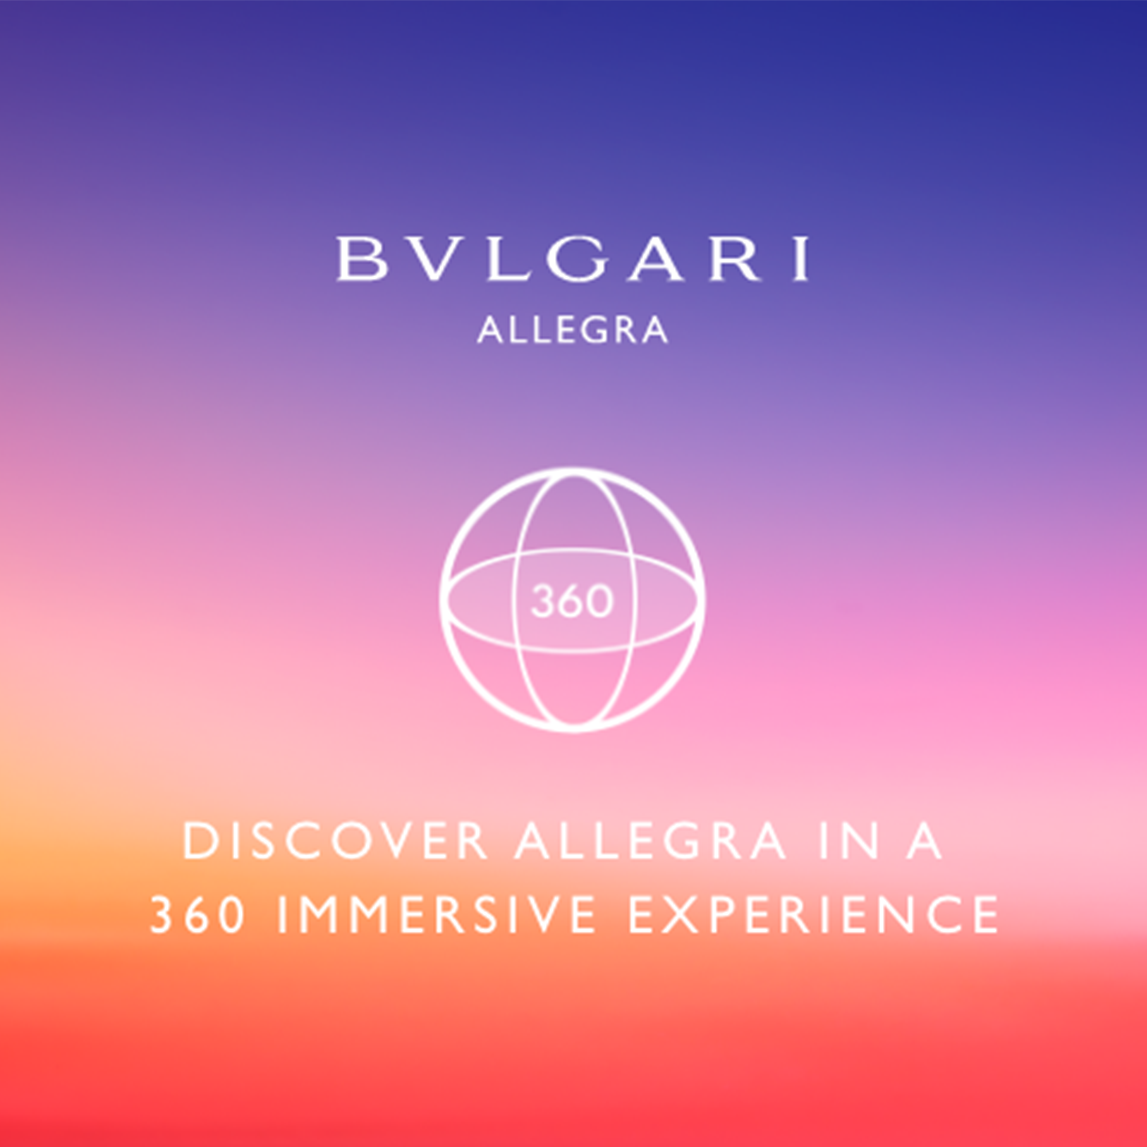 BVLGARI Allegra Content Visual 4